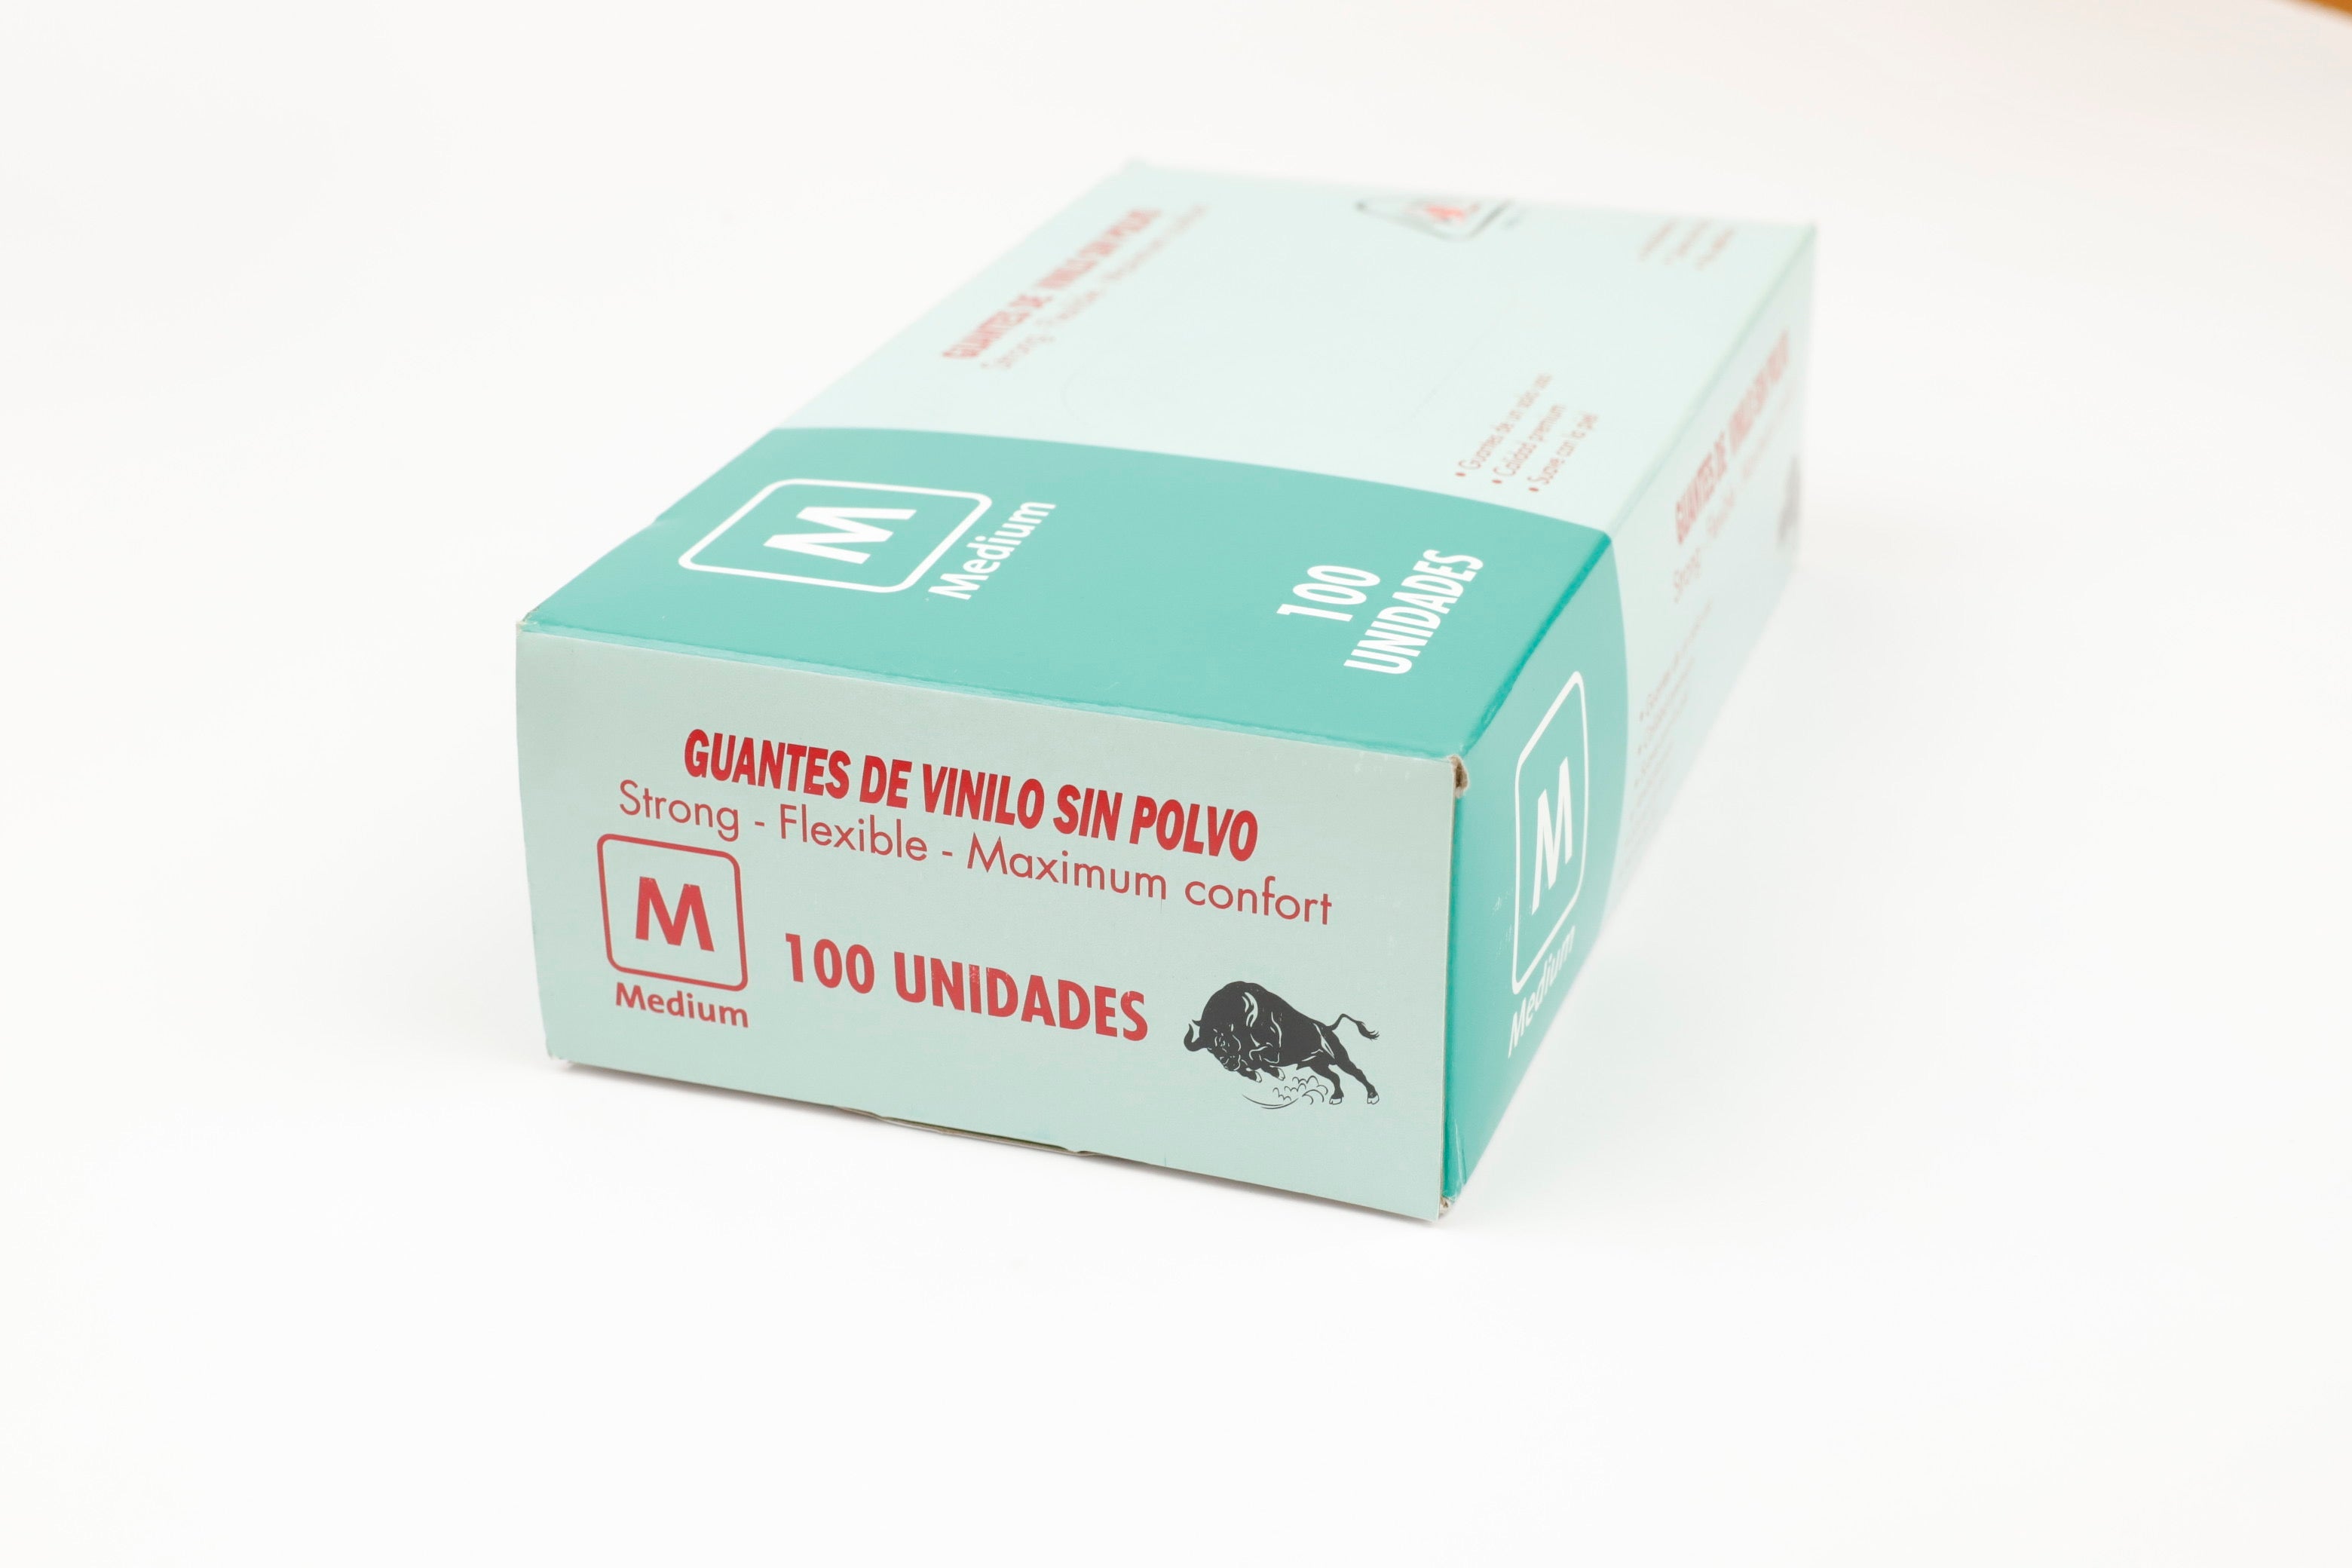 Guantes de vinilo sin polvo - Caja x 100 unidades - Pedido 10 cajas - Jelt